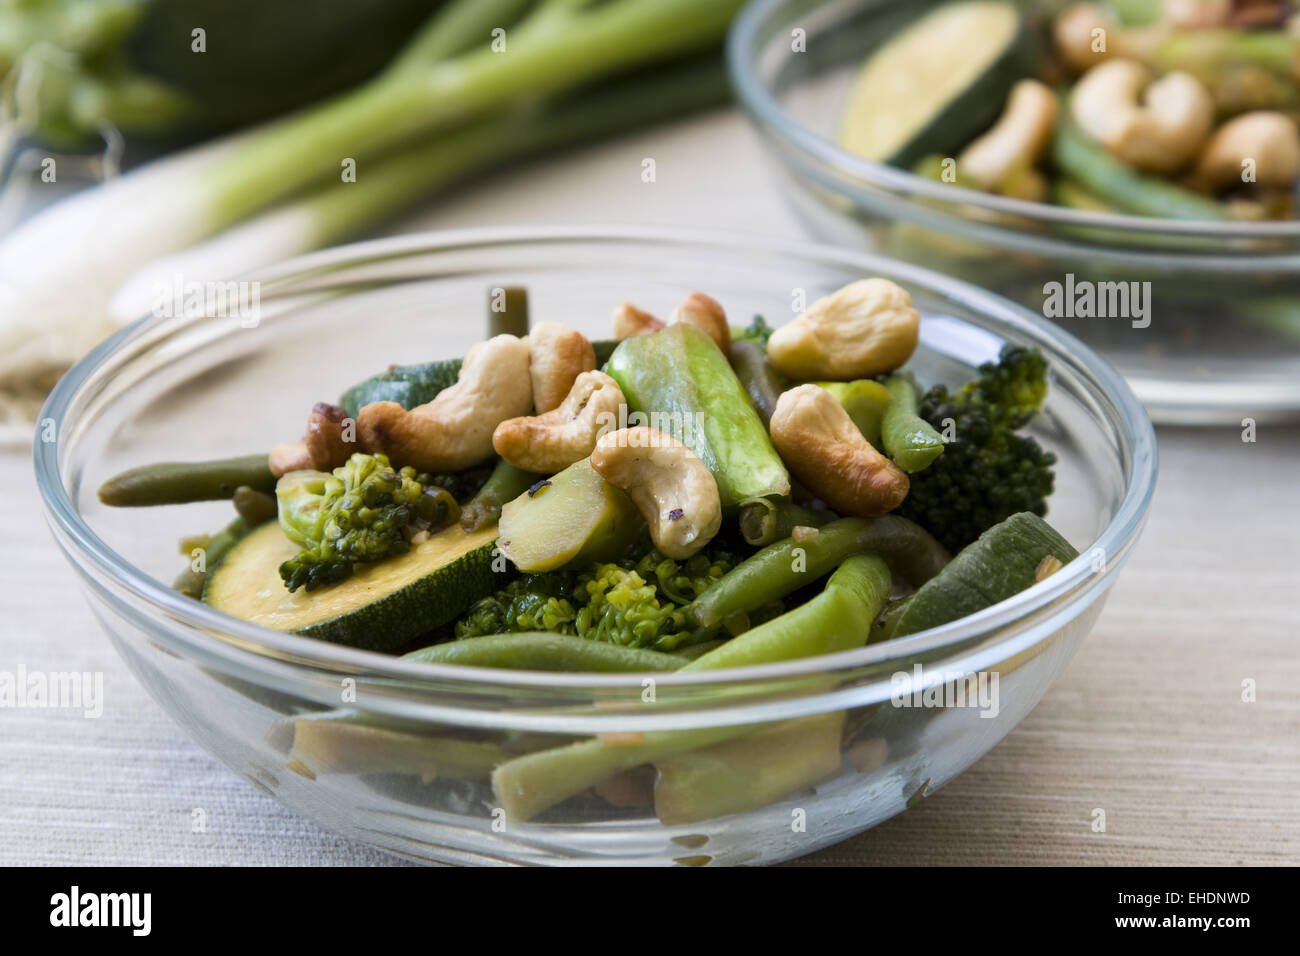 Wok Gemüse - Wok Vegetables Stock Photo